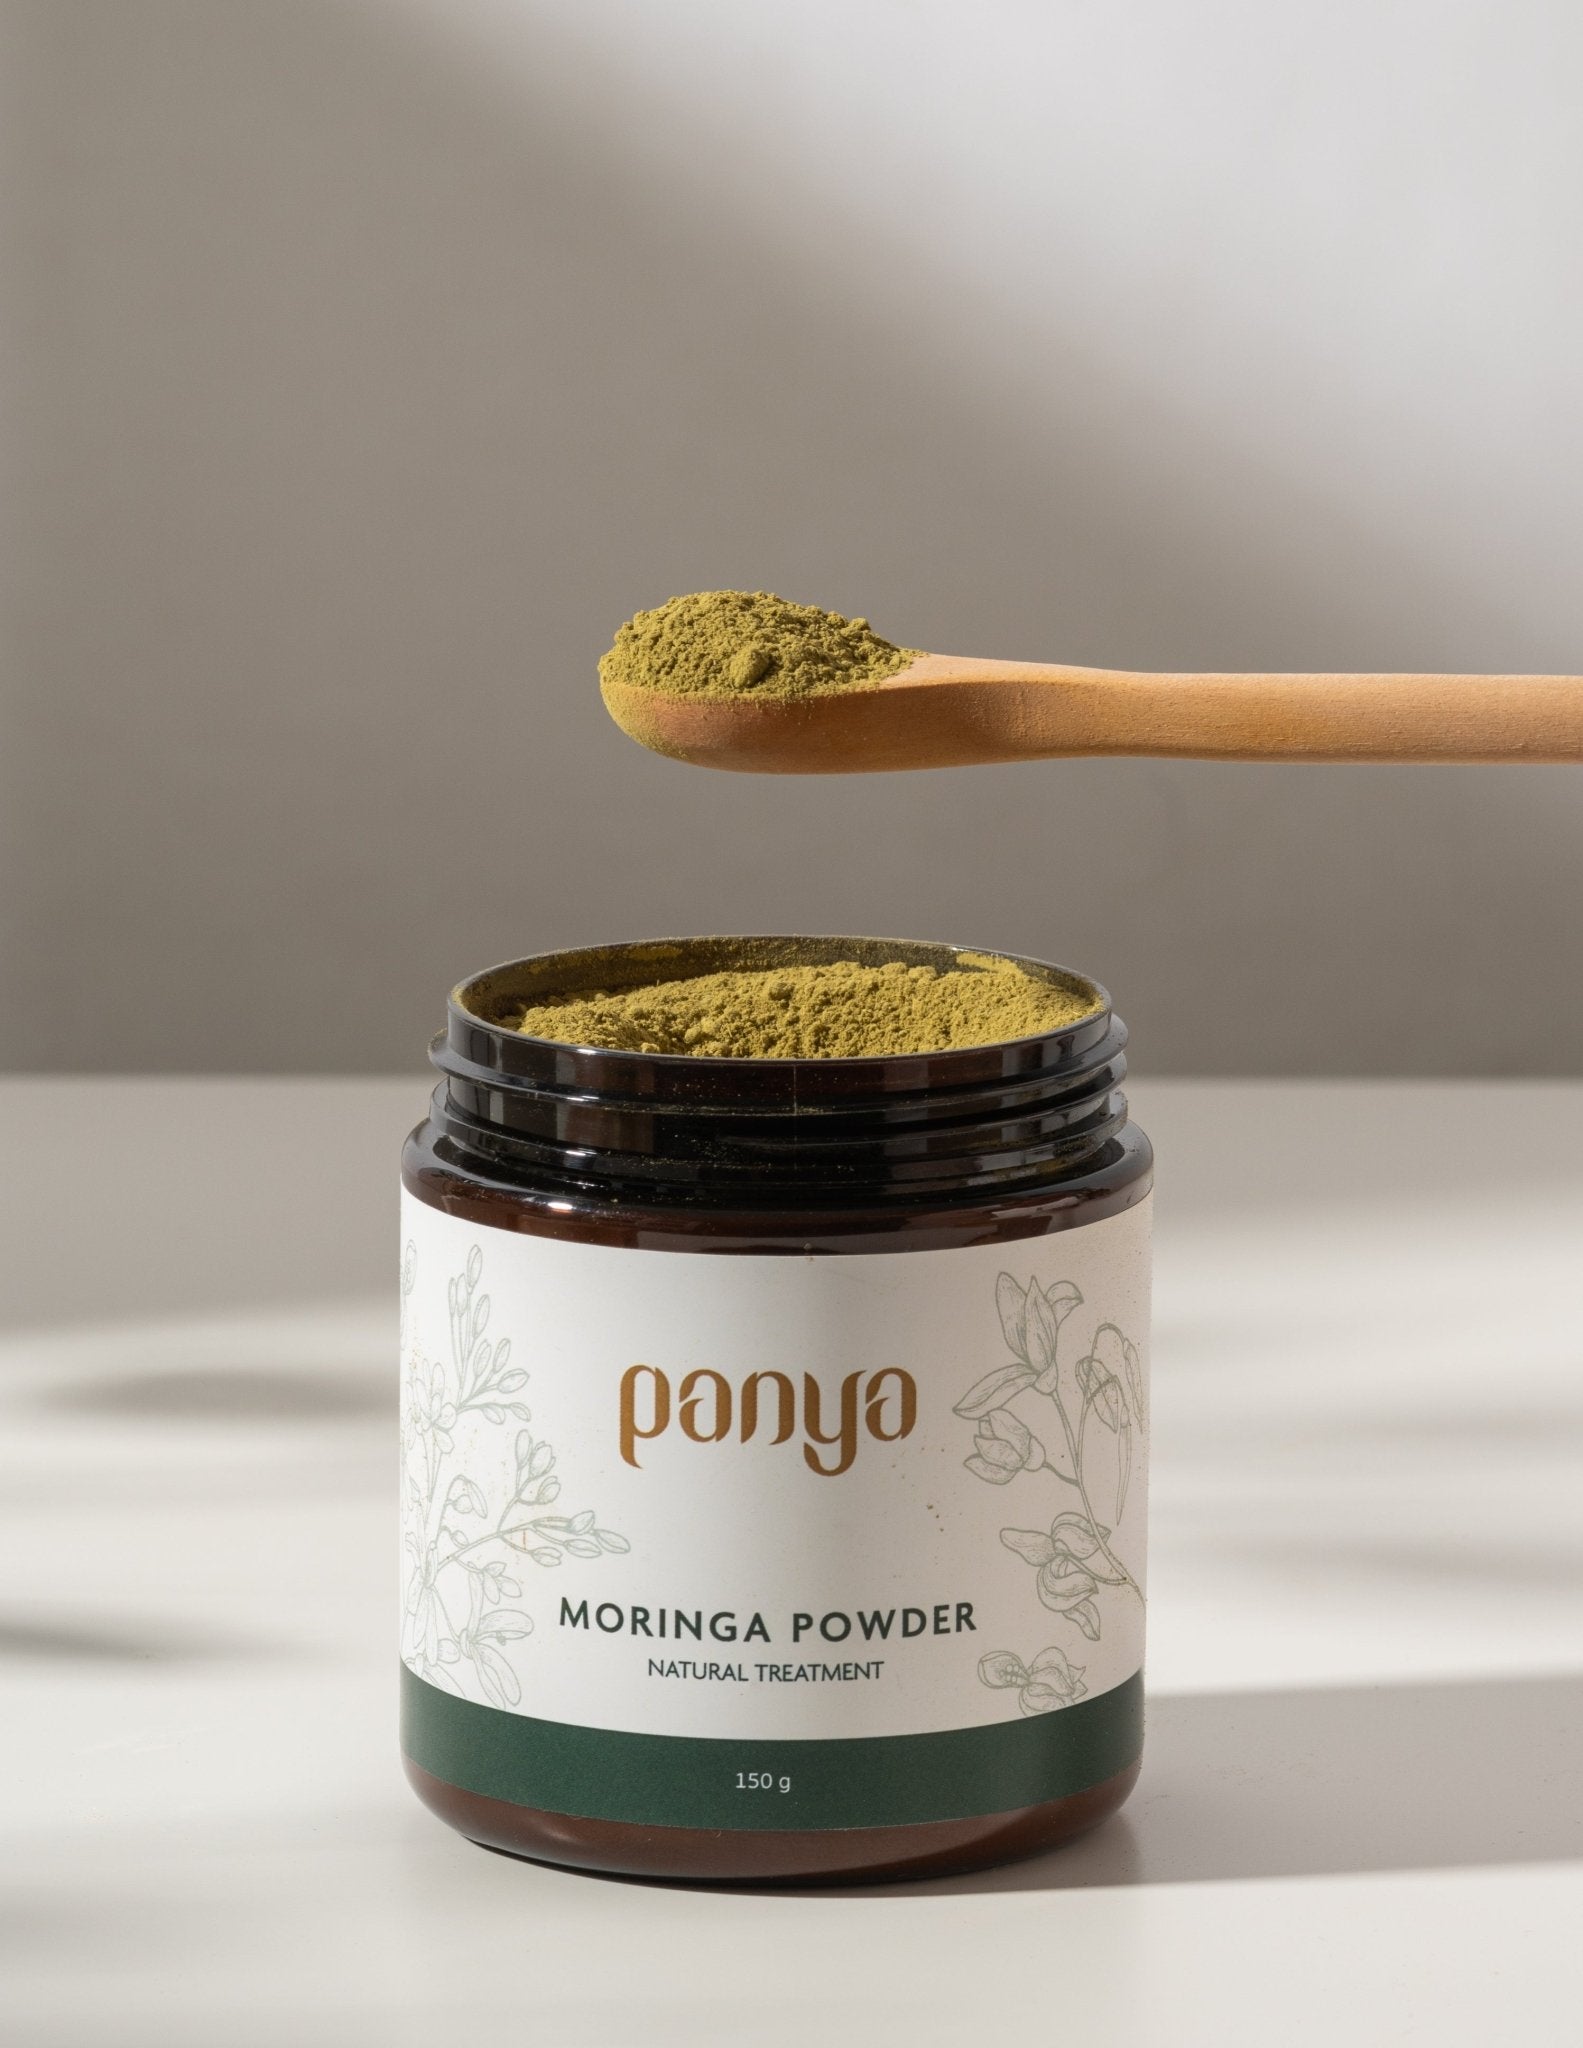 Panya Moringa Powder Supplement: vegan, 100% finely ground leaves for immune system boosting, anti-inflammatory properties and abundant antioxidants.